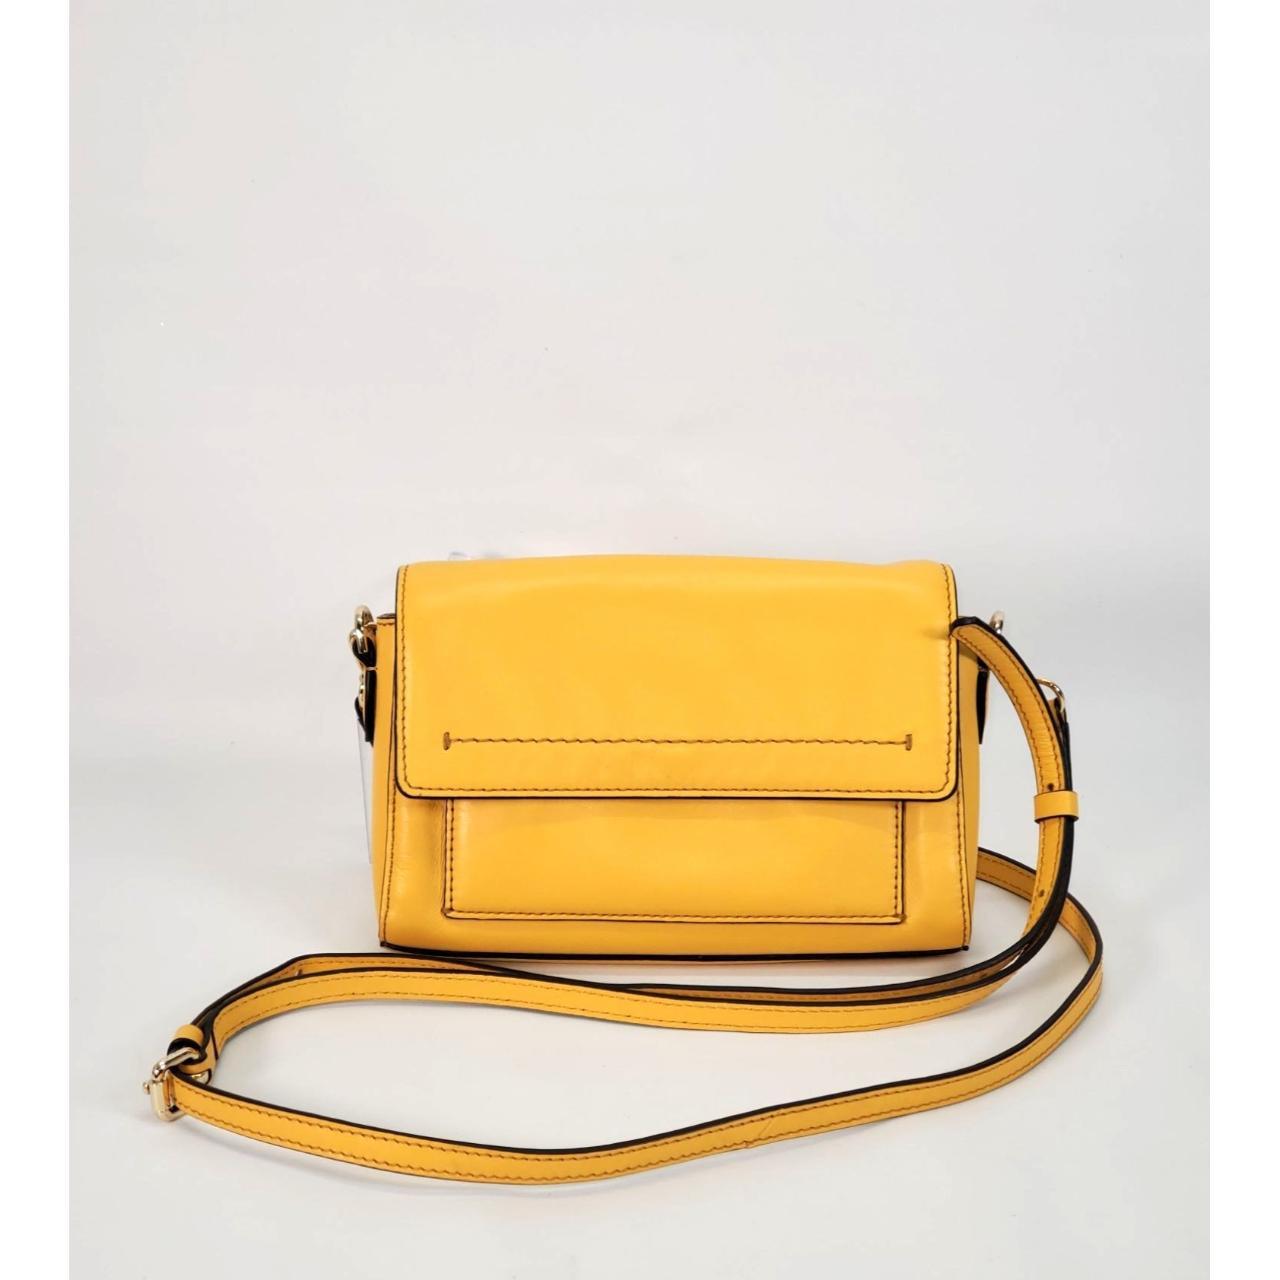 Cole Haan Neon Green Yellow Snakeskin Cross Body Bag Purse NWOT Silver  Zippers | eBay